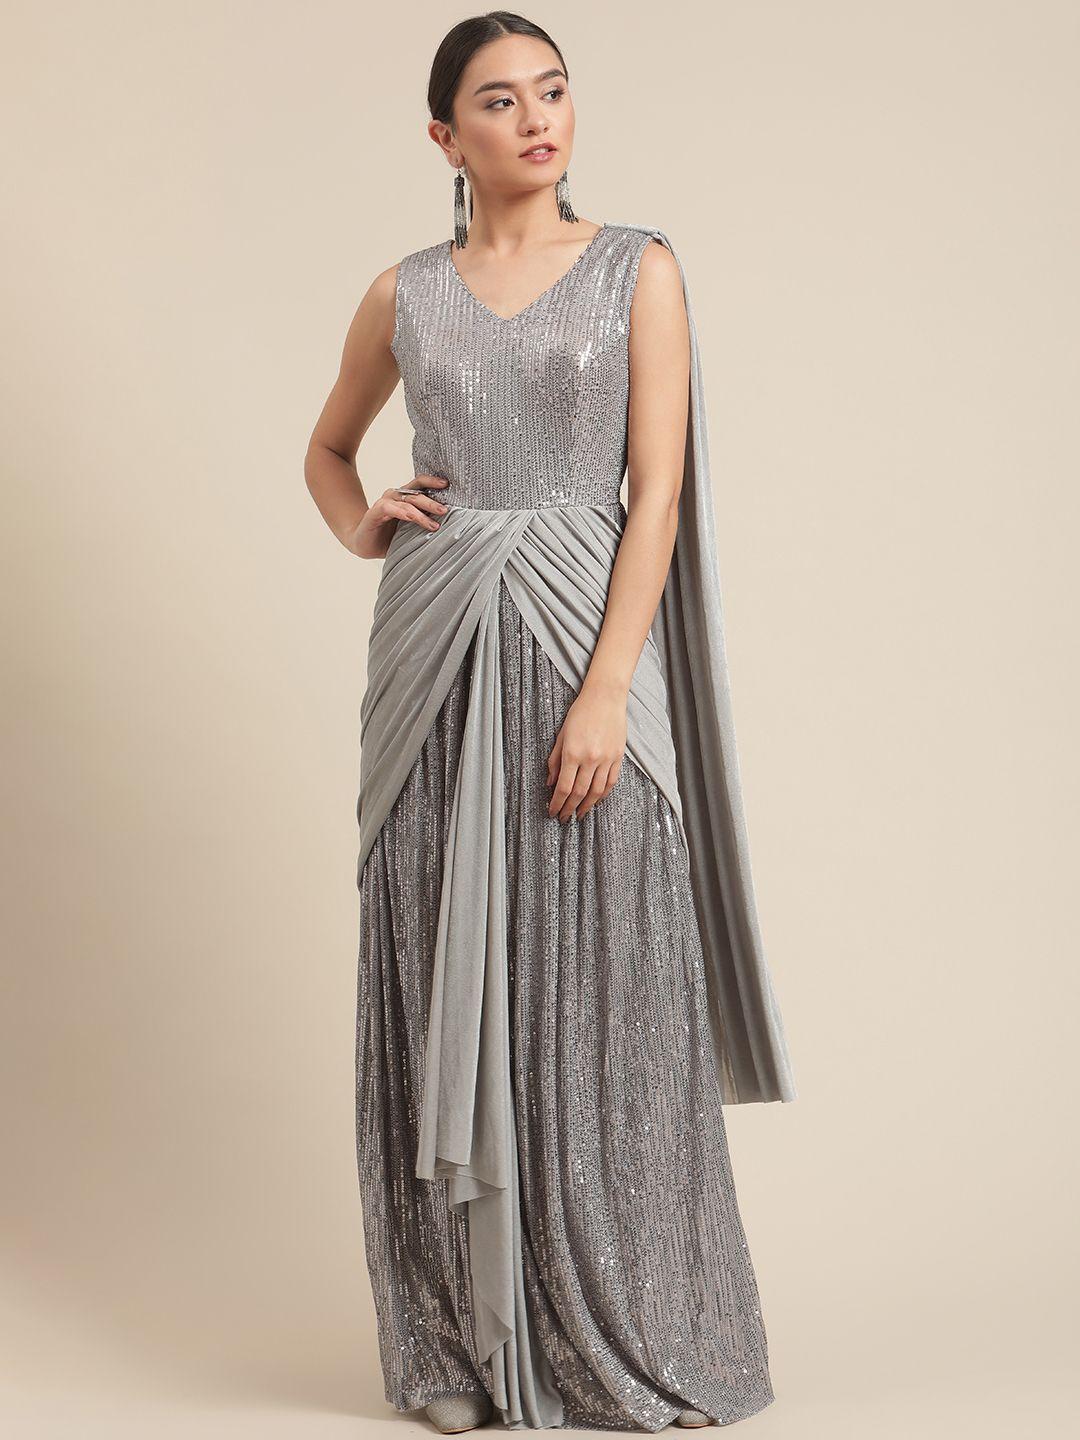 grancy grey embellished ready to wear saree